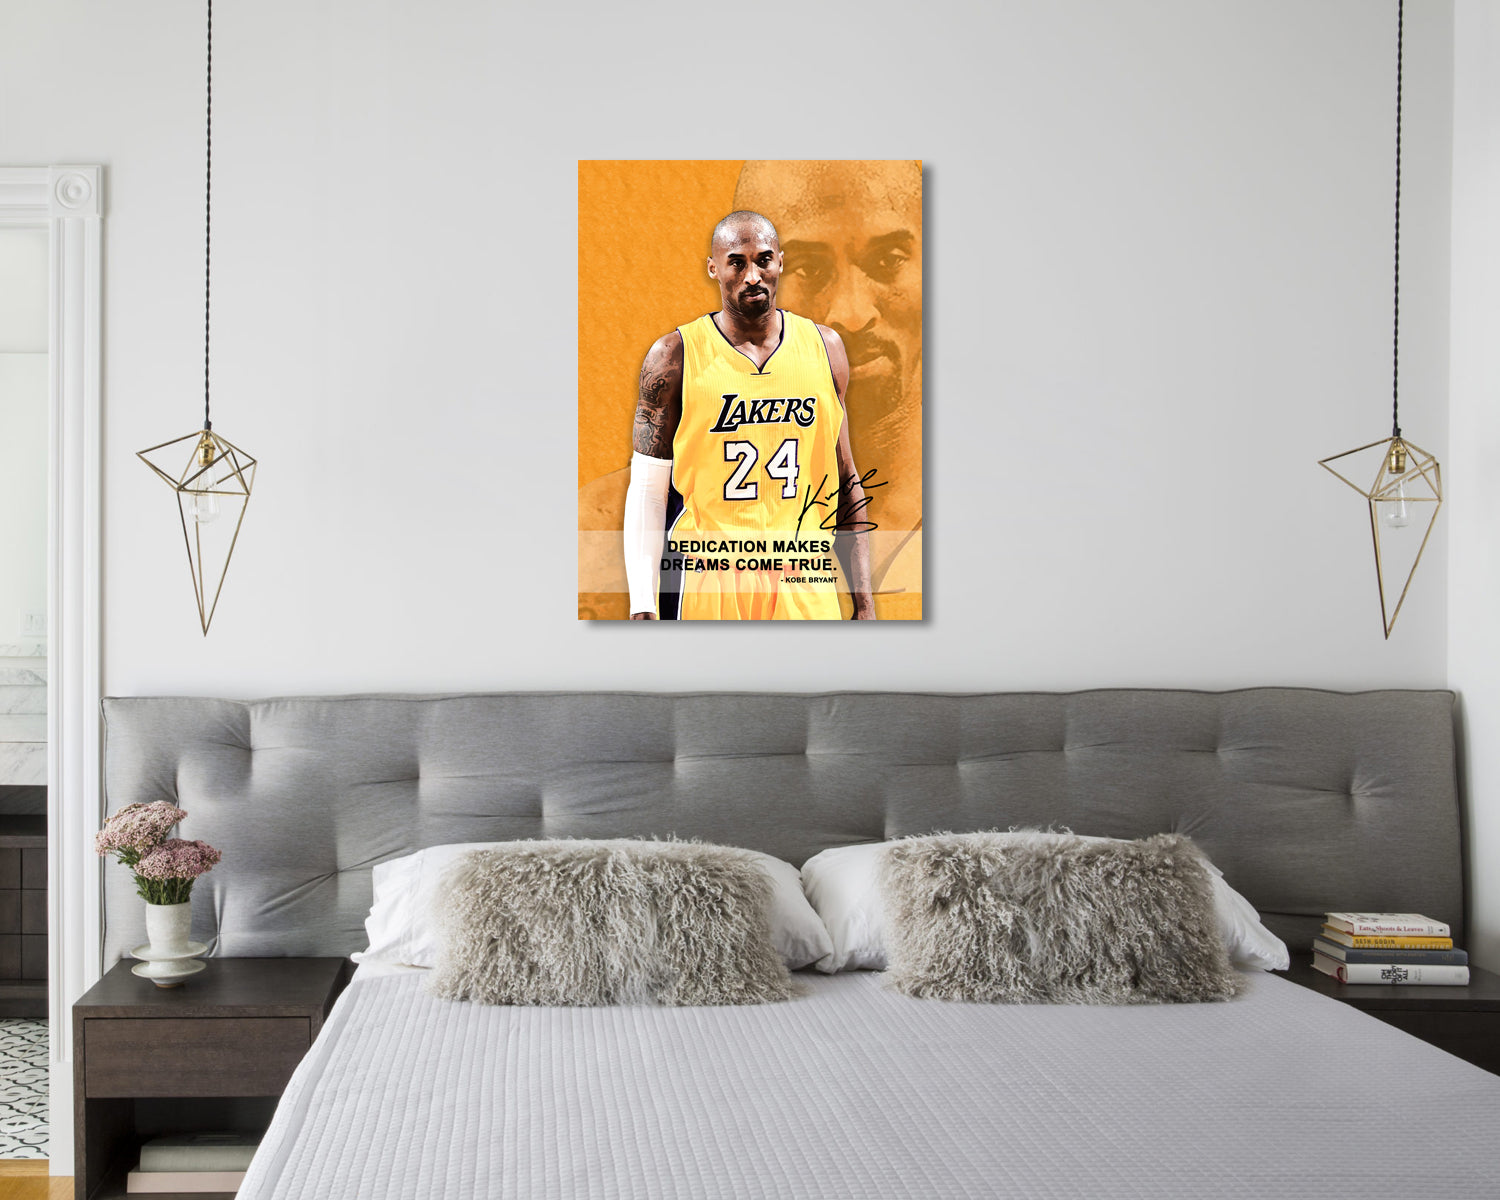 Kobe Bryant Dedication makes dreams come true Canvas Wall Art 